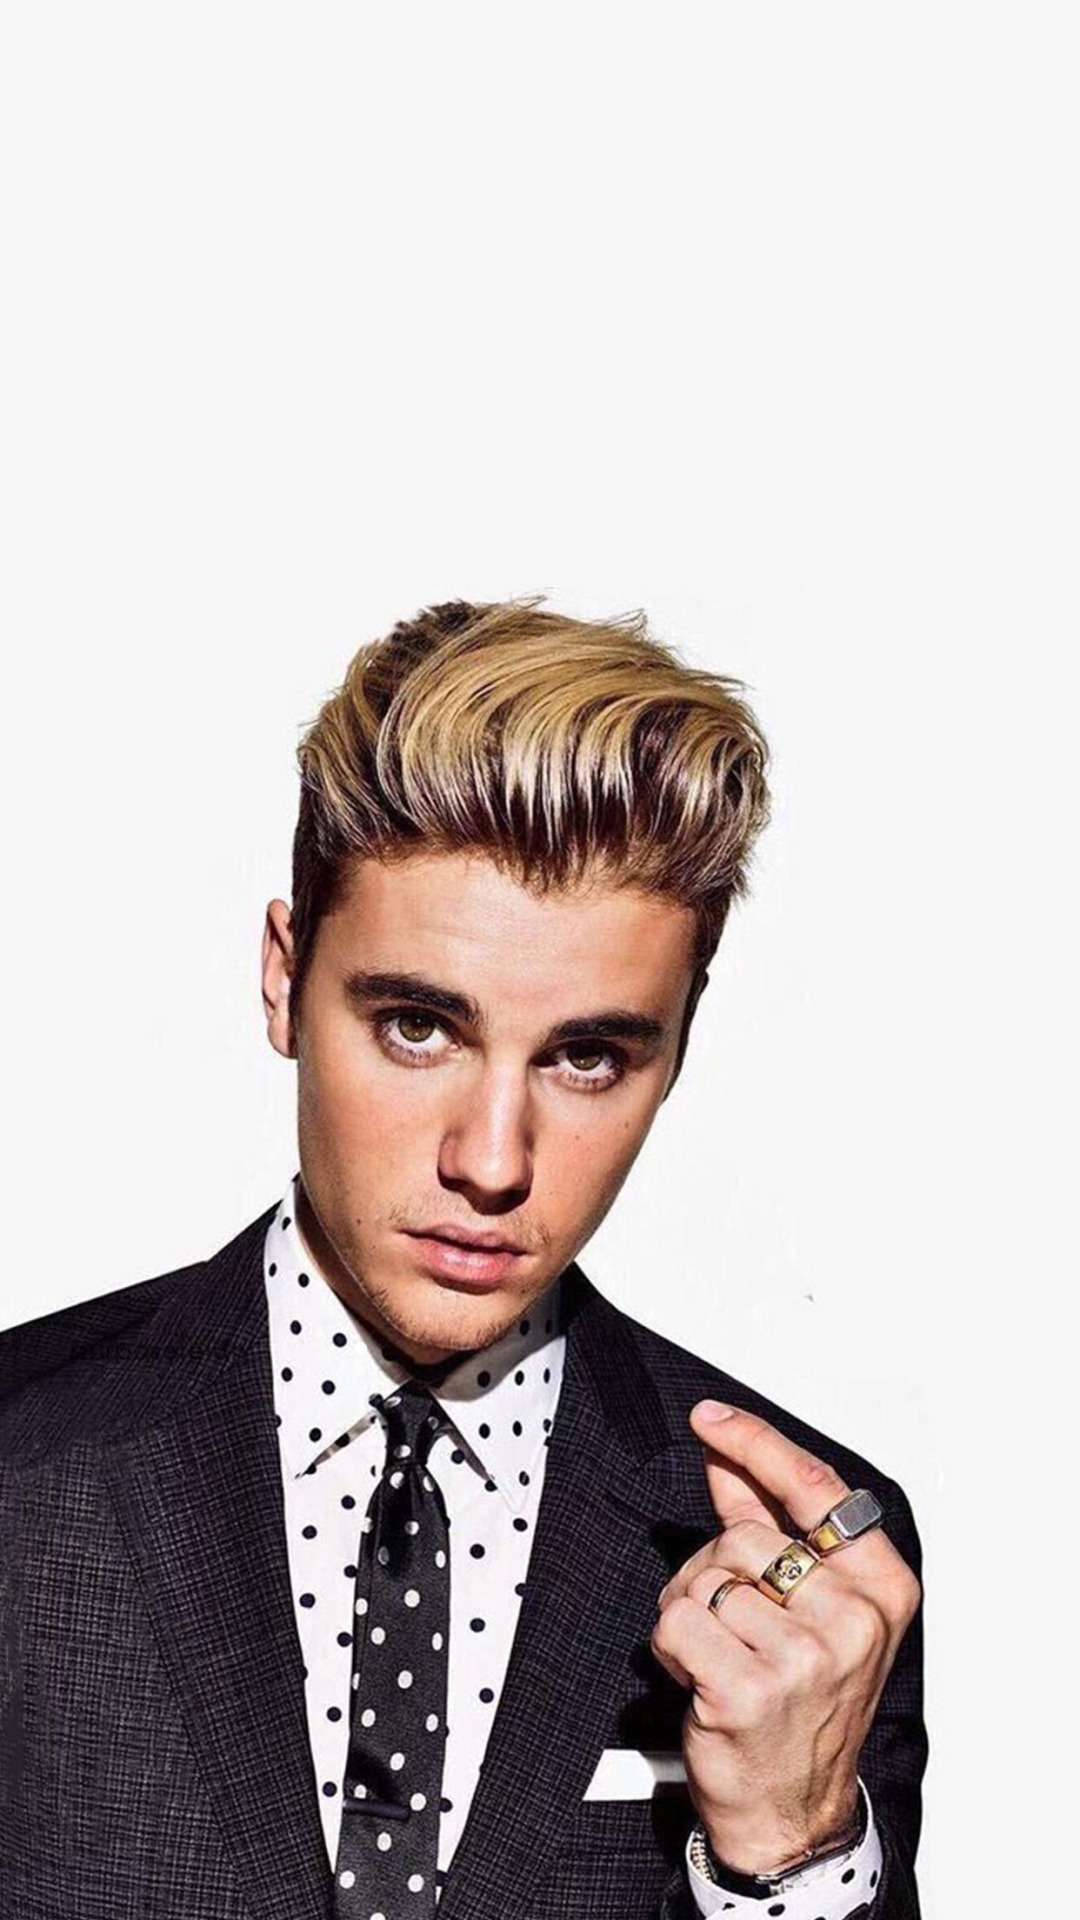 Justin Bieber In Black Suit Background